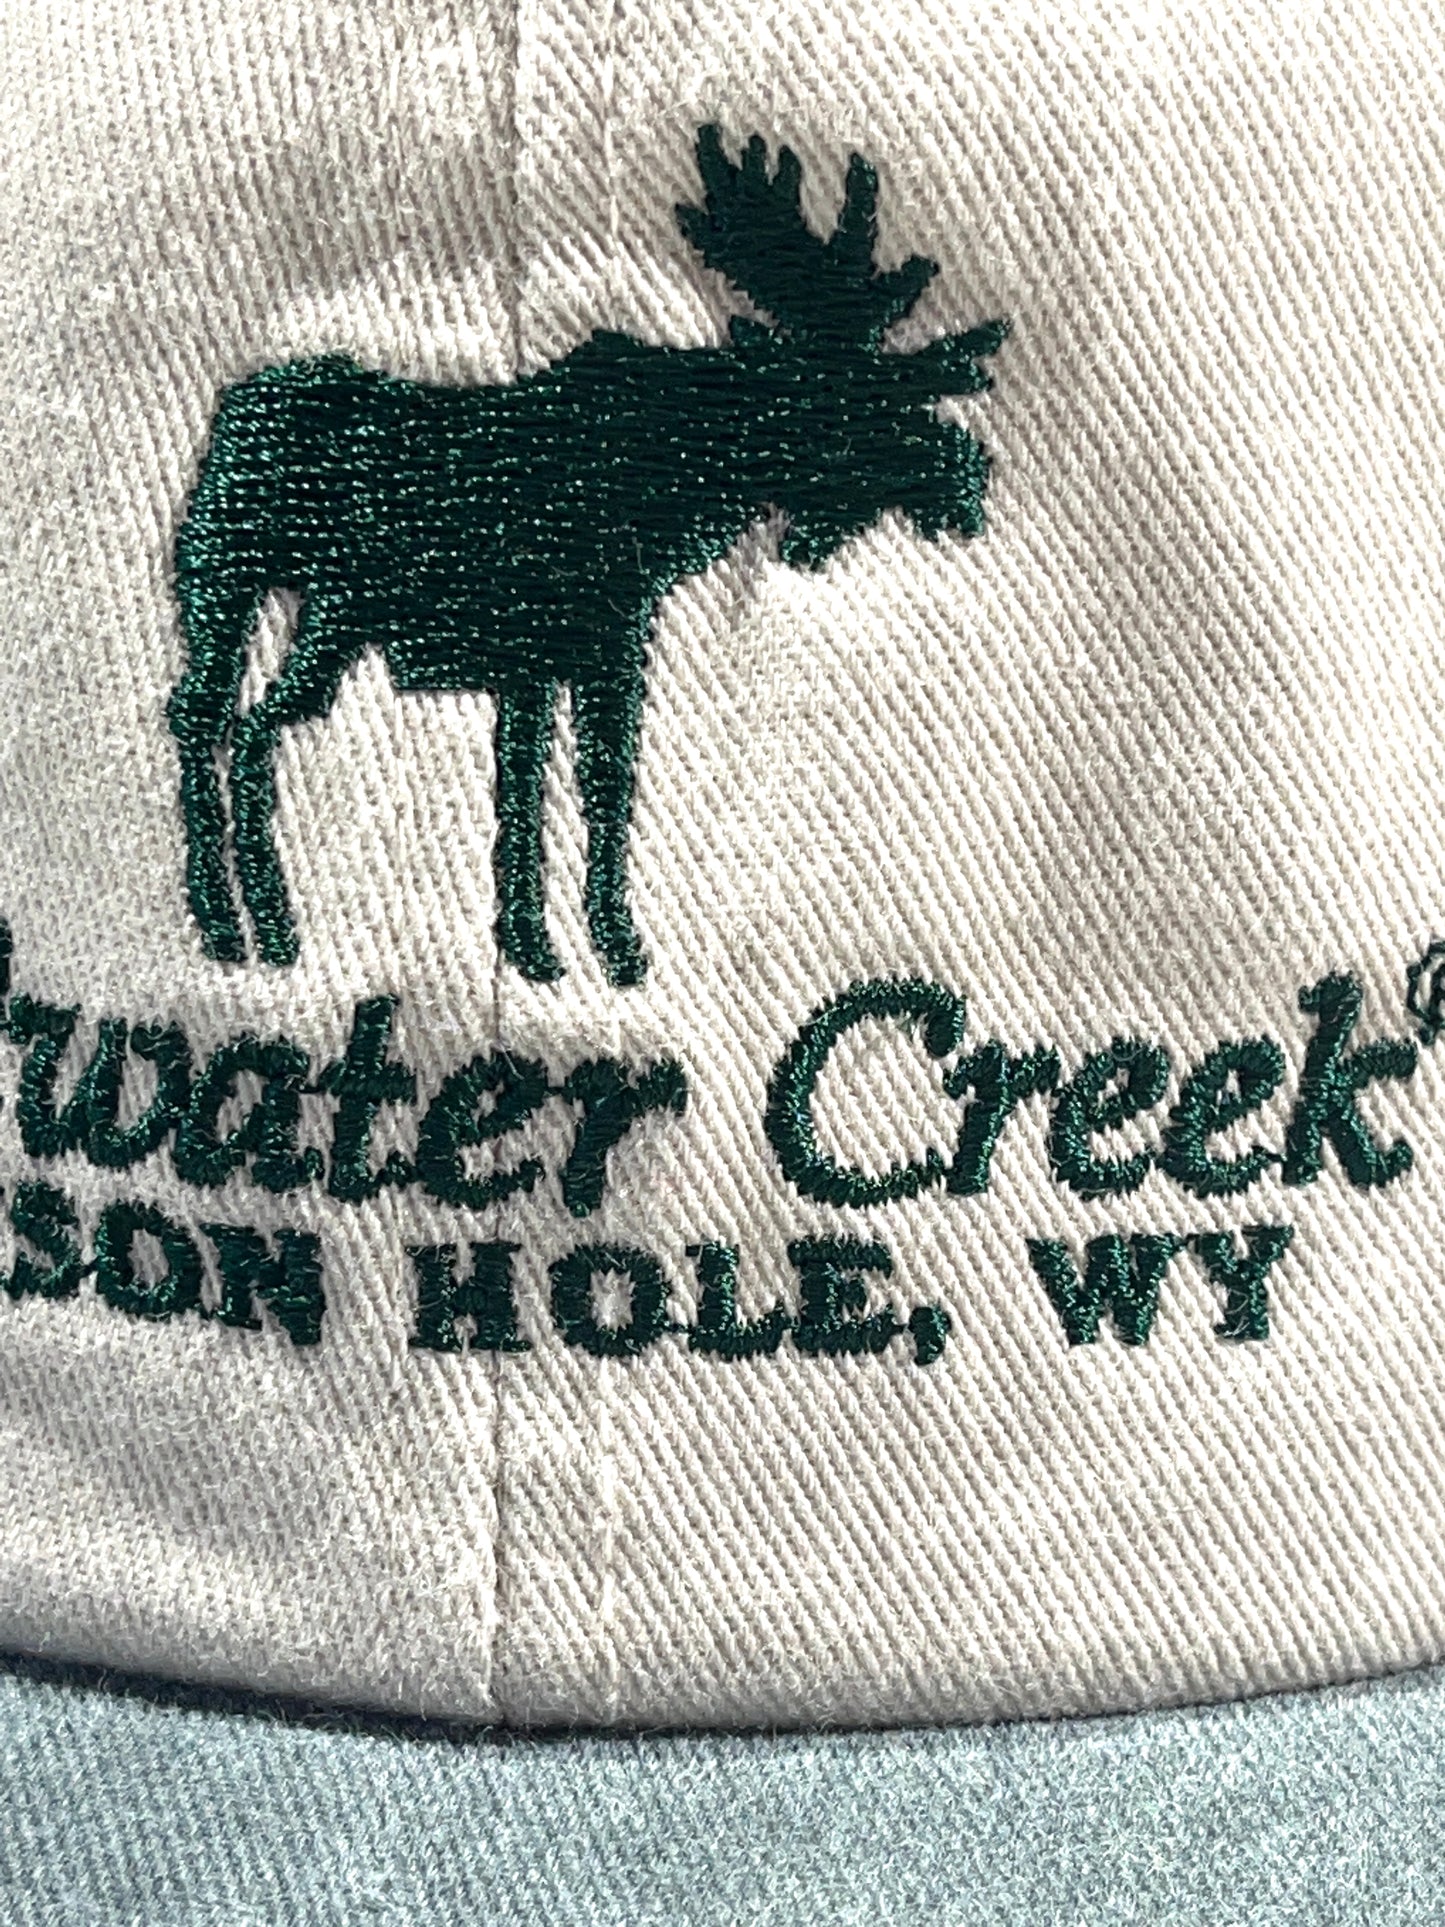 Vintage Coldwater Creek Hat 90's